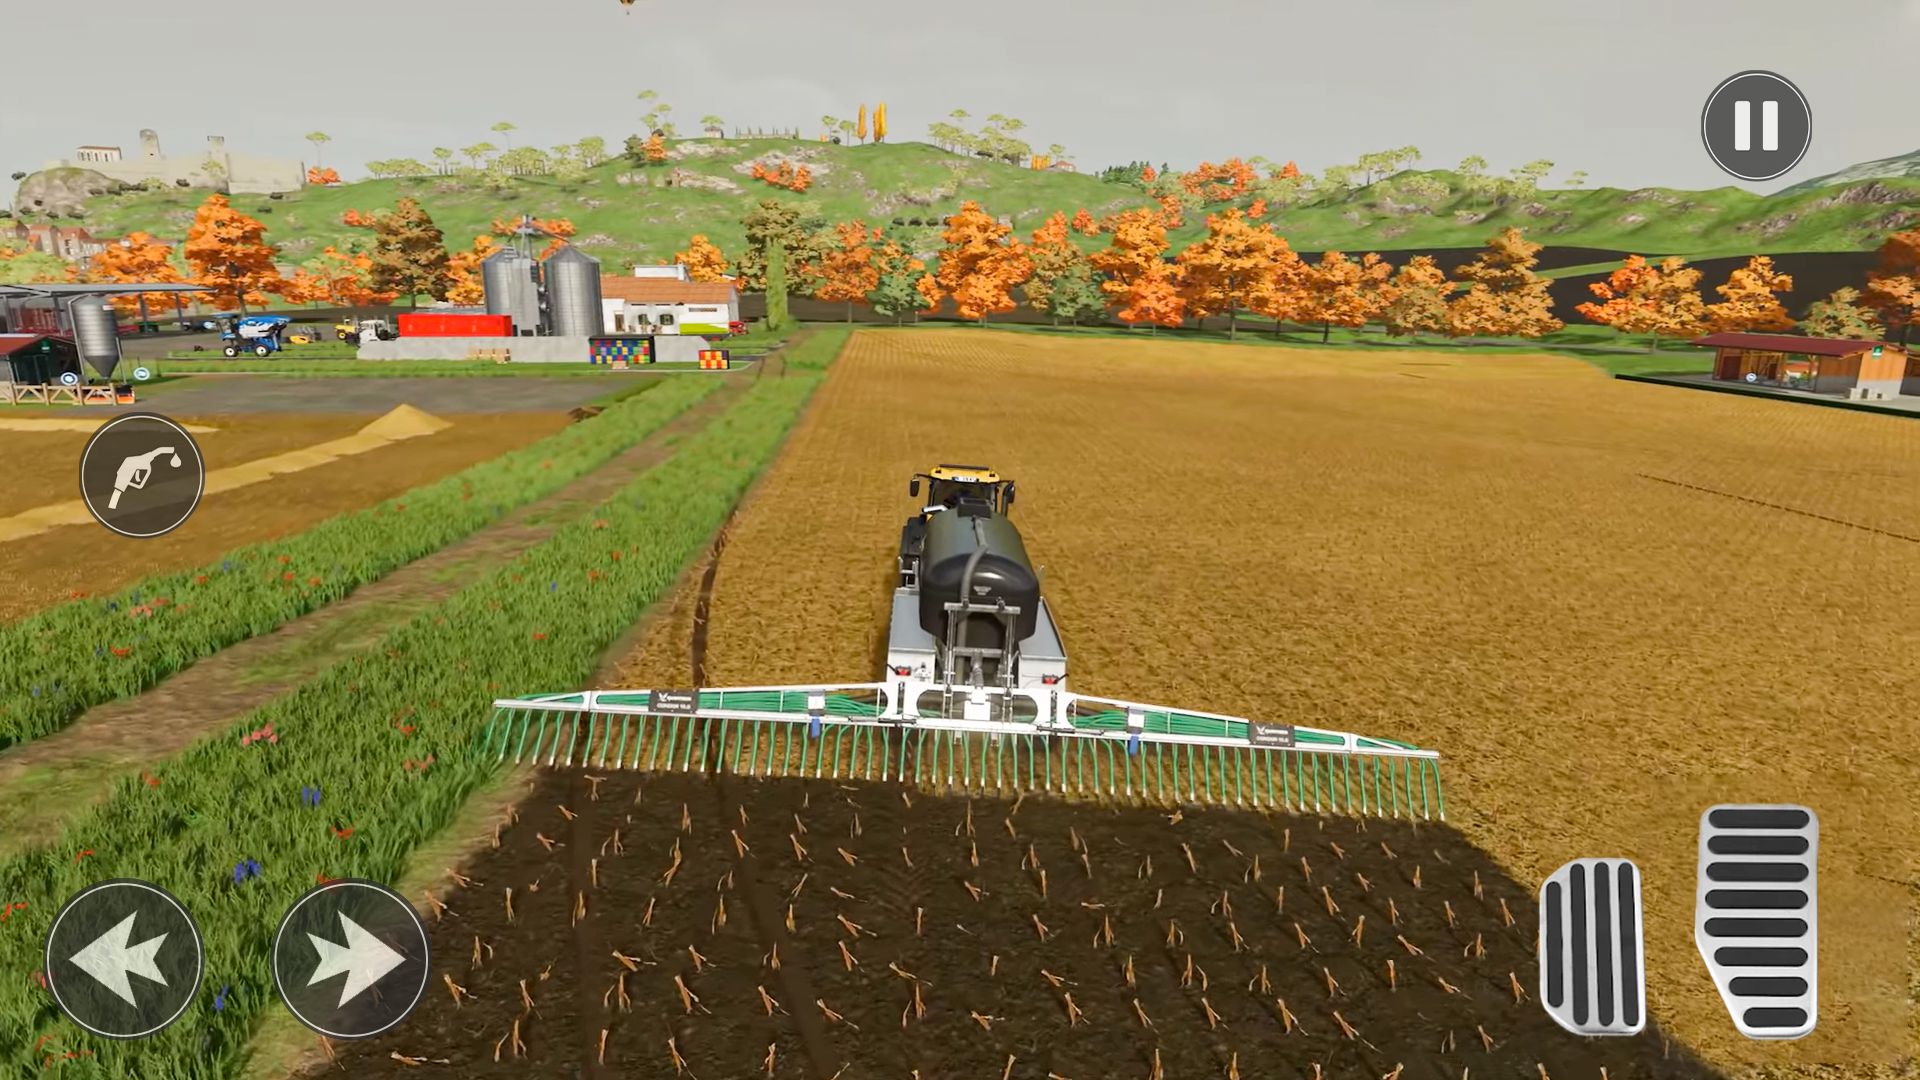 Download Farming Simulator 20 on PC with MEmu